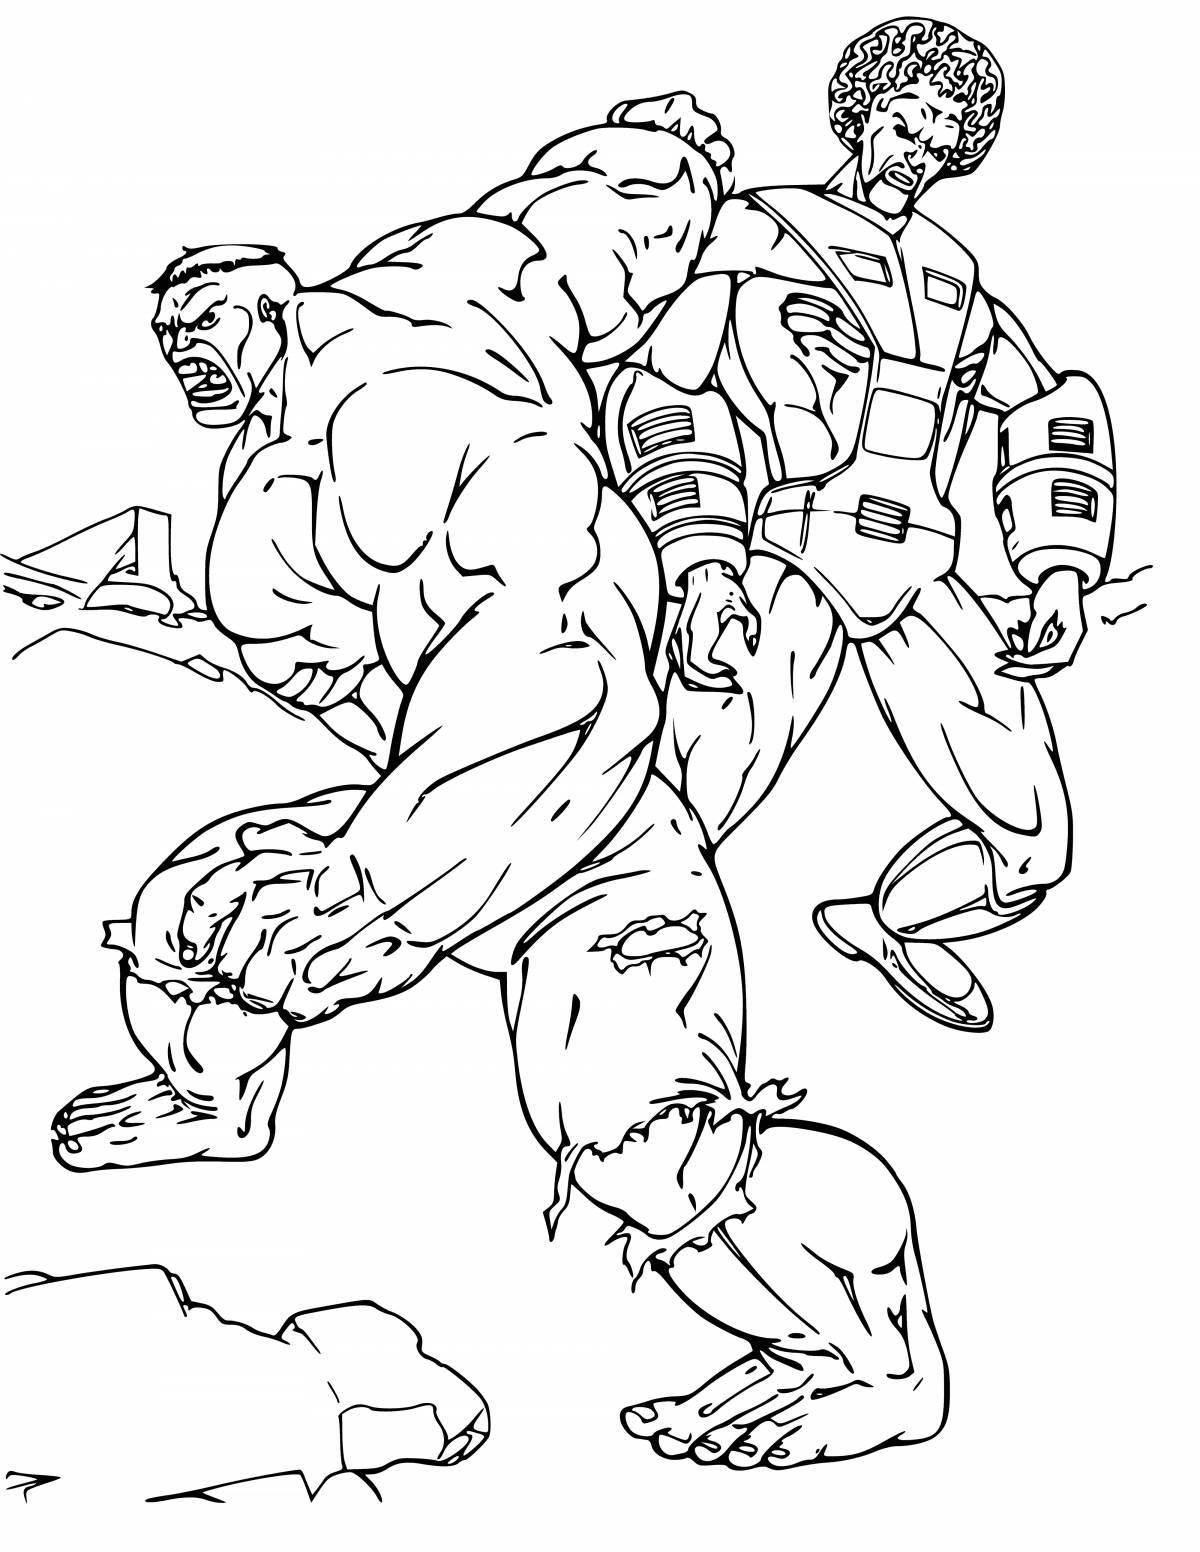 Dazzling iron hulk coloring page